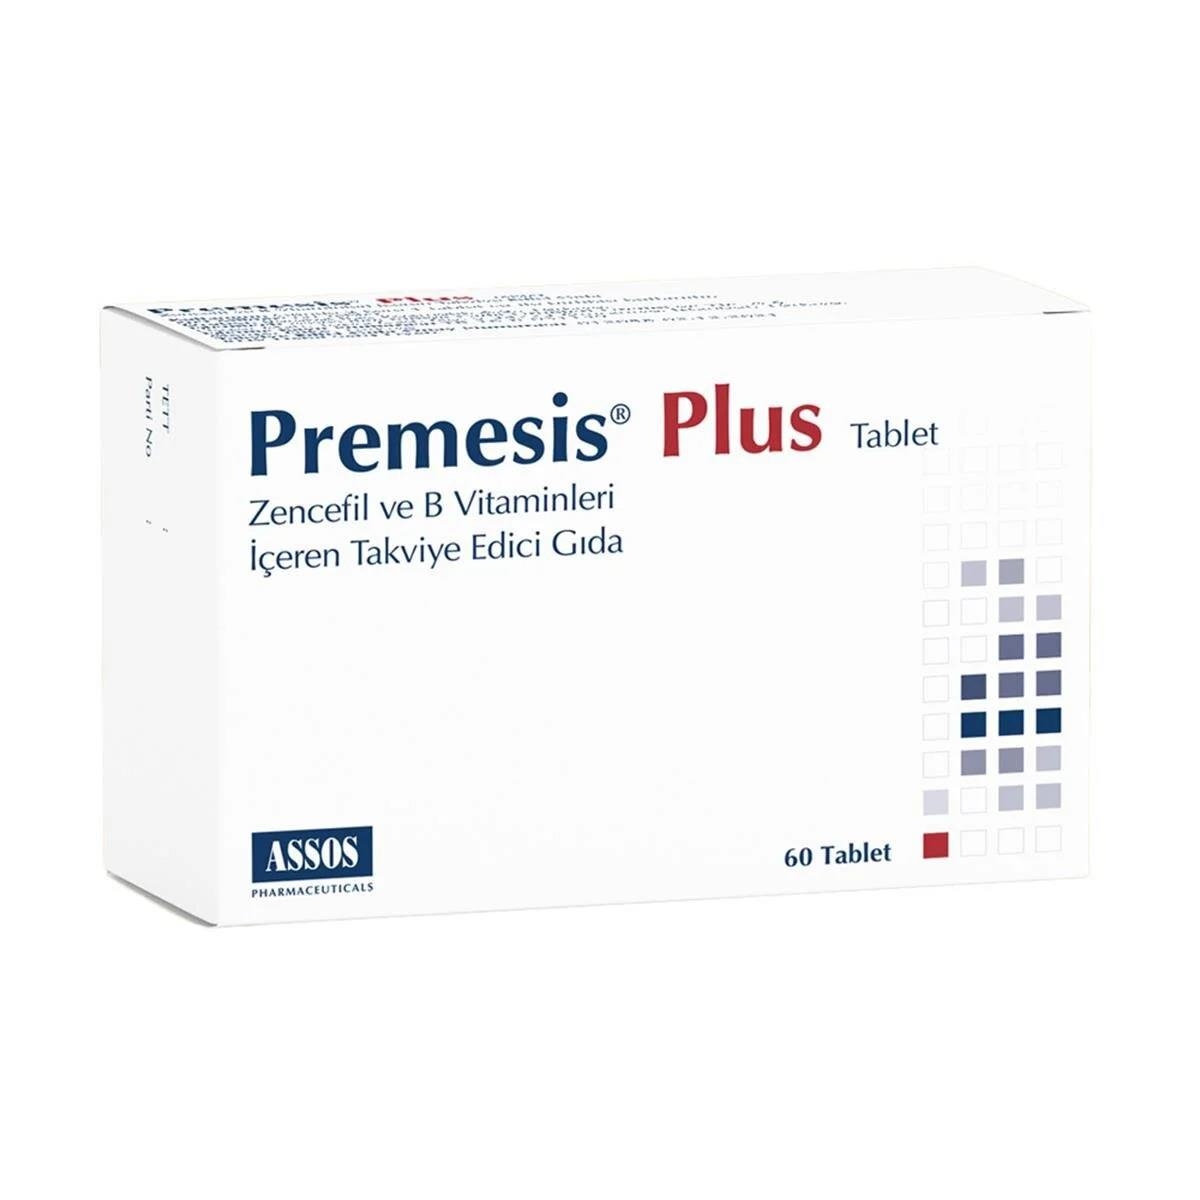 Premesis Plus 60 Tablet - 1